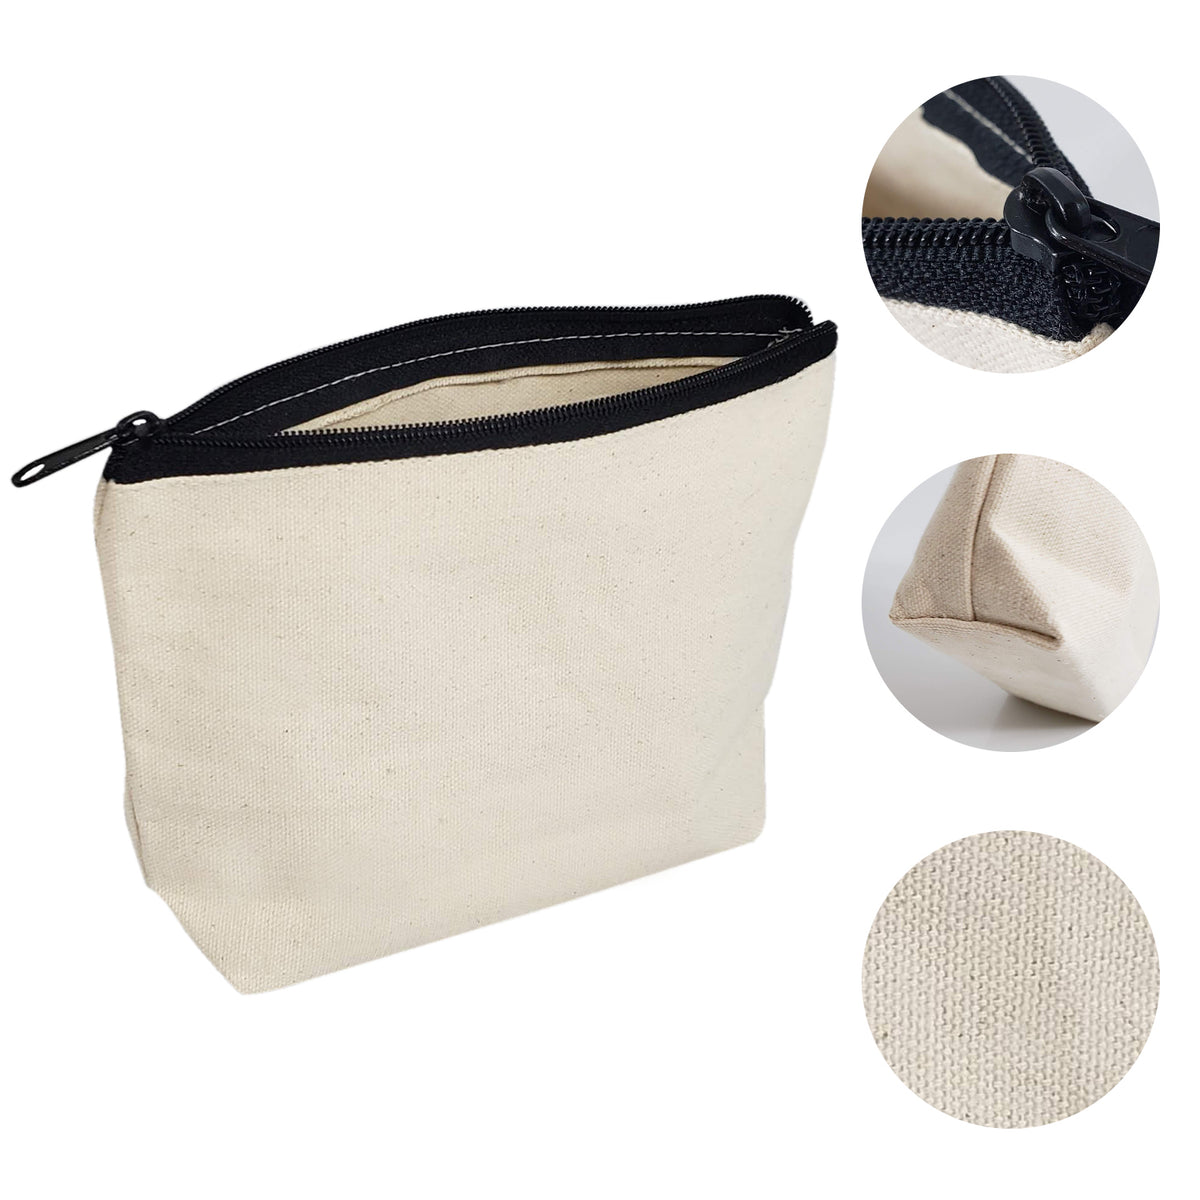 Muka Sample Makeup Bag 7 x 5 Natural Cotton Canvas Pouch with Black  Zipper Sale, Reviews. - Opentip